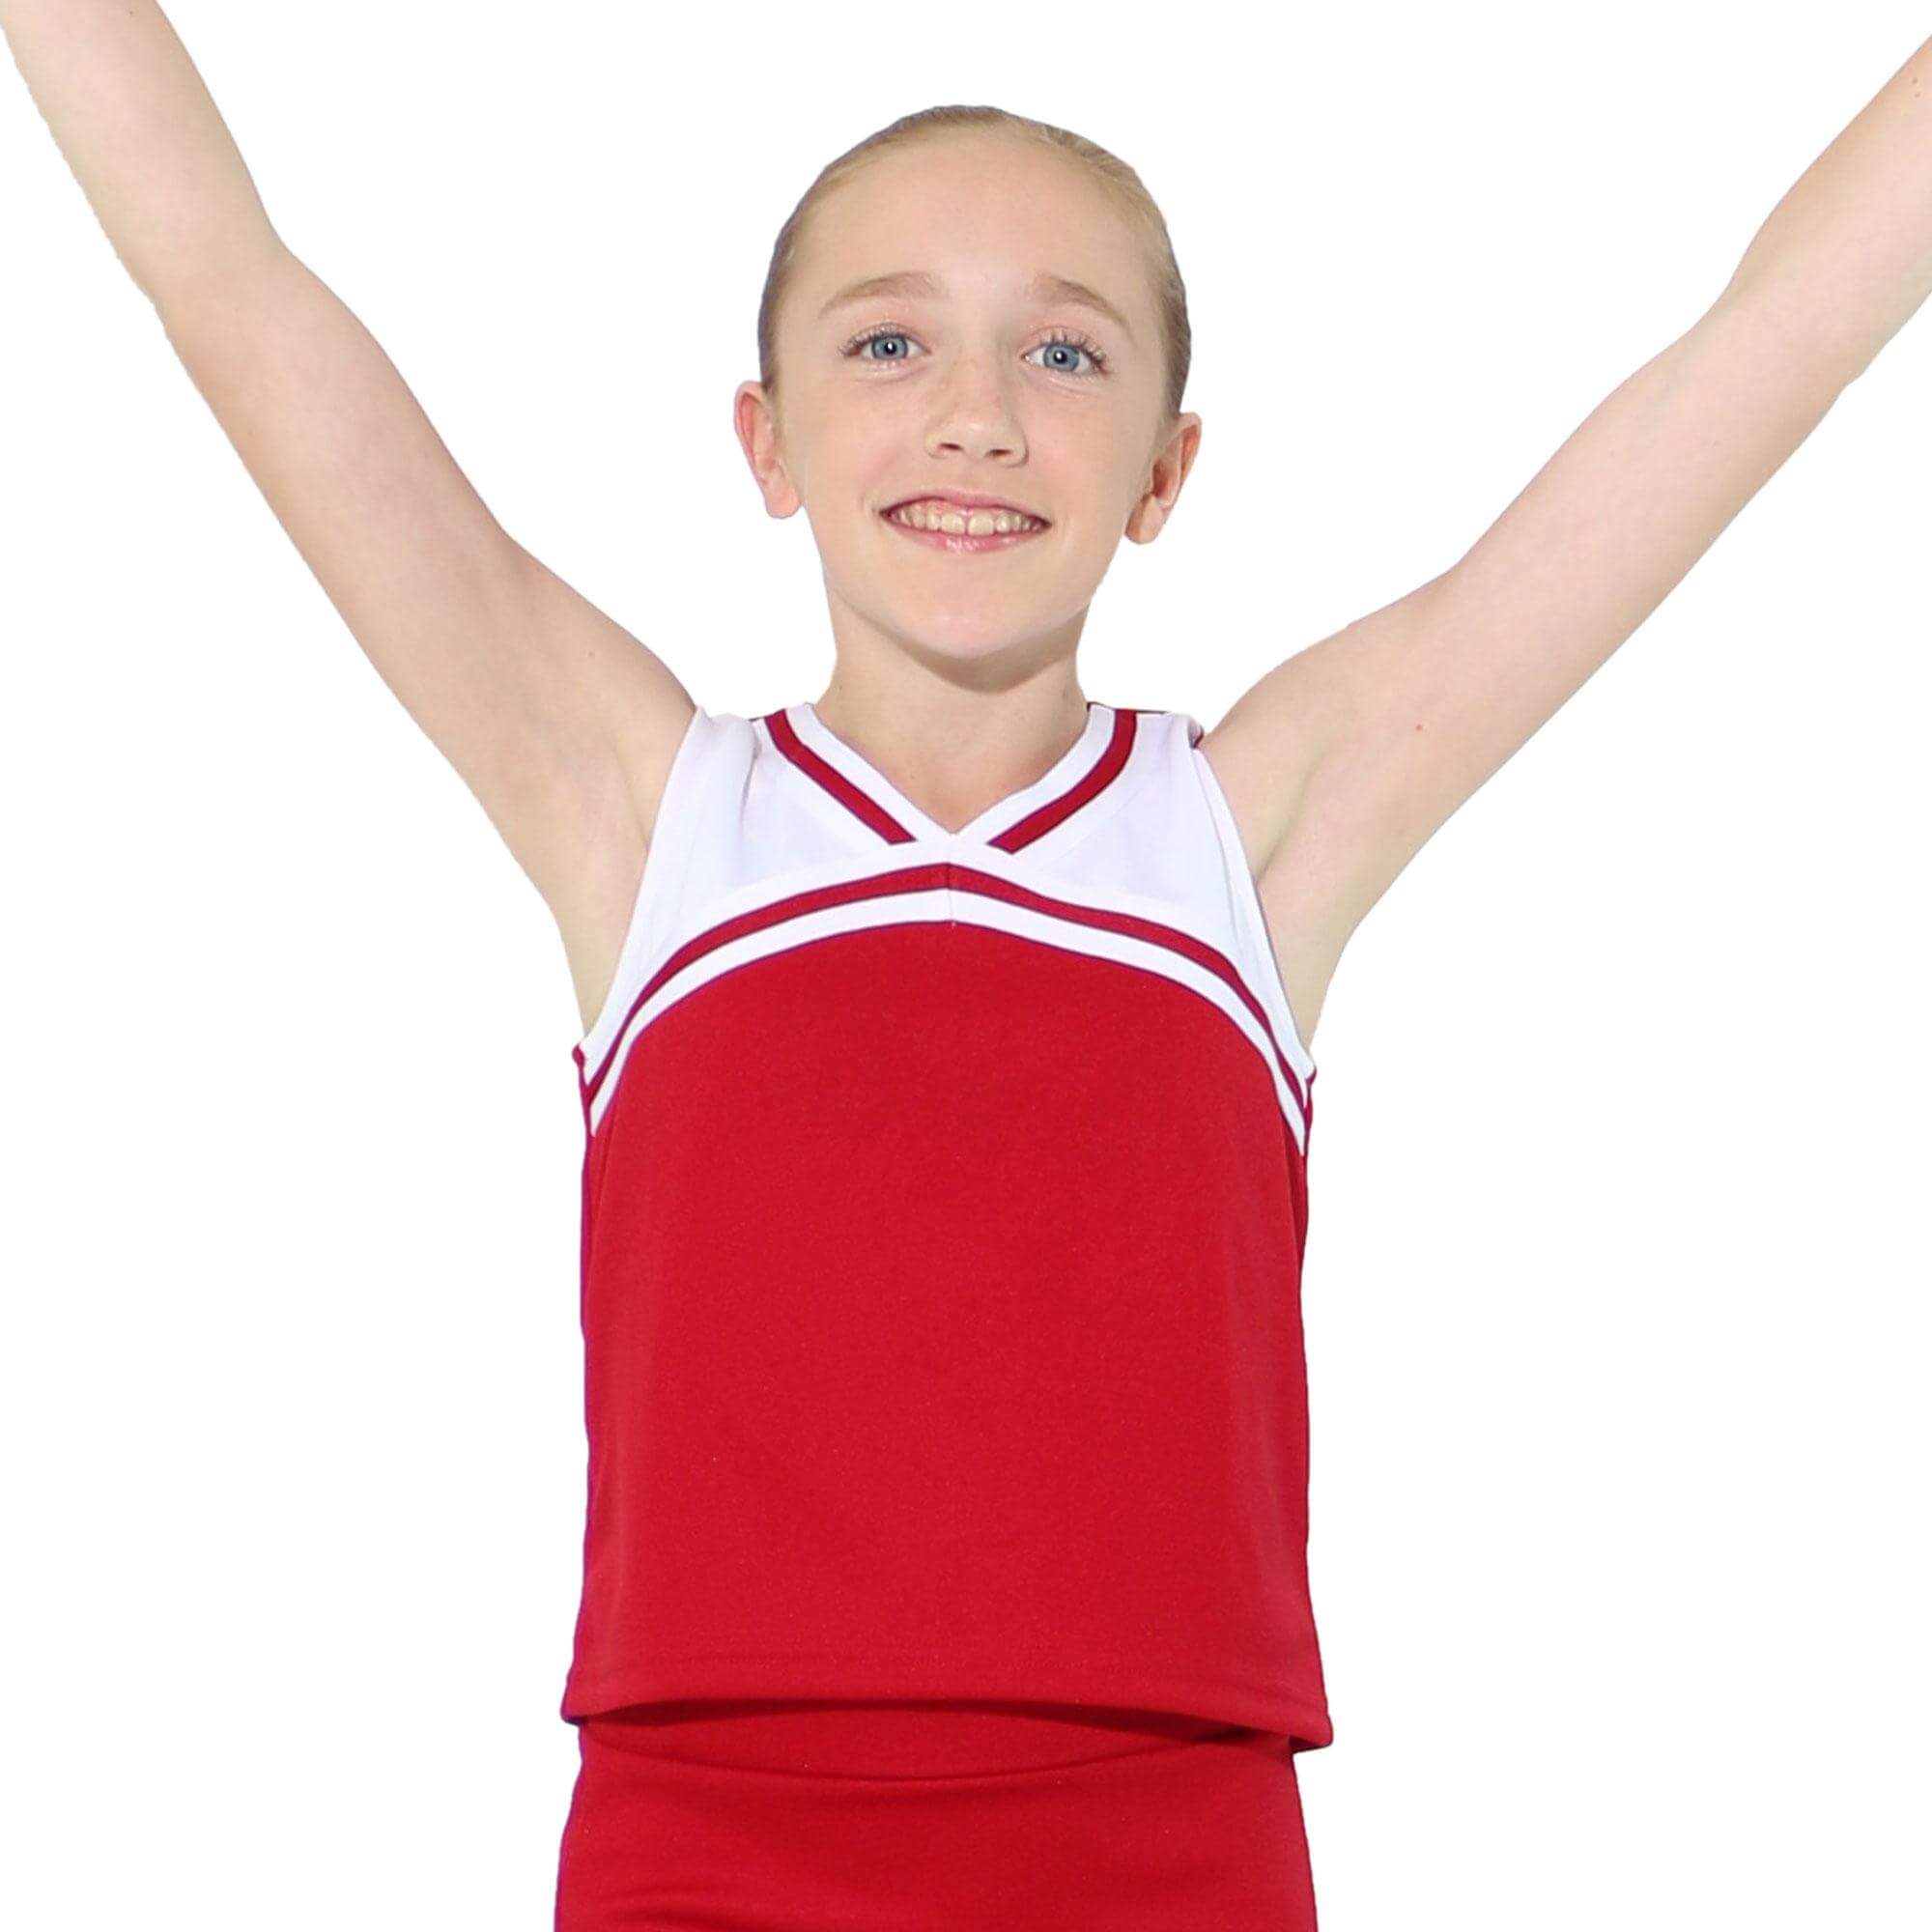 Danzcue Child Classic Cheerleaders Uniform Shell Top - Click Image to Close